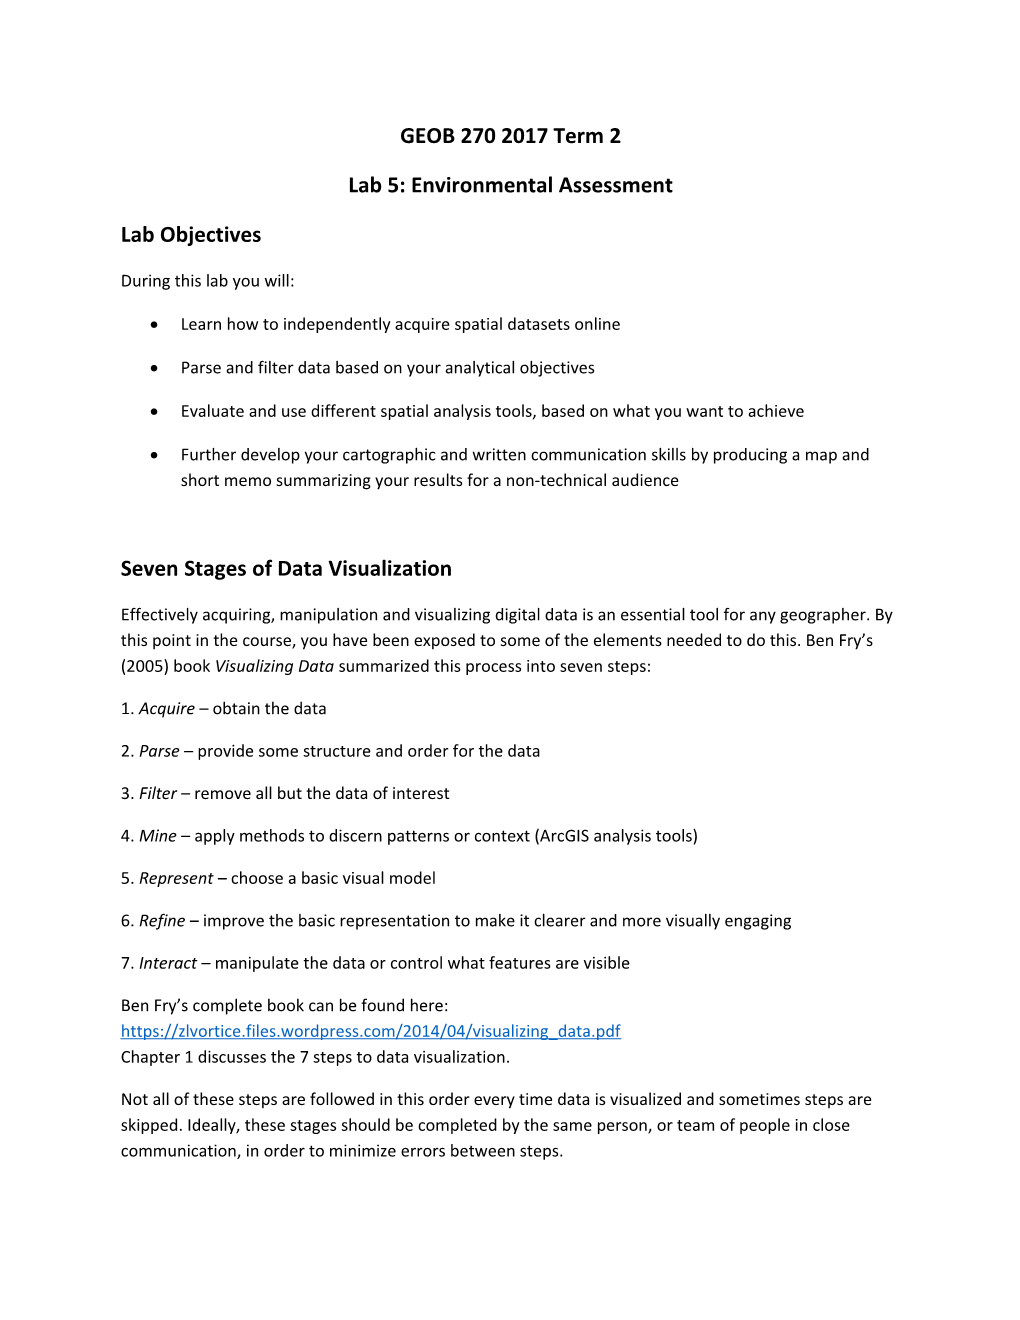 Lab 5: Environmental Assessment